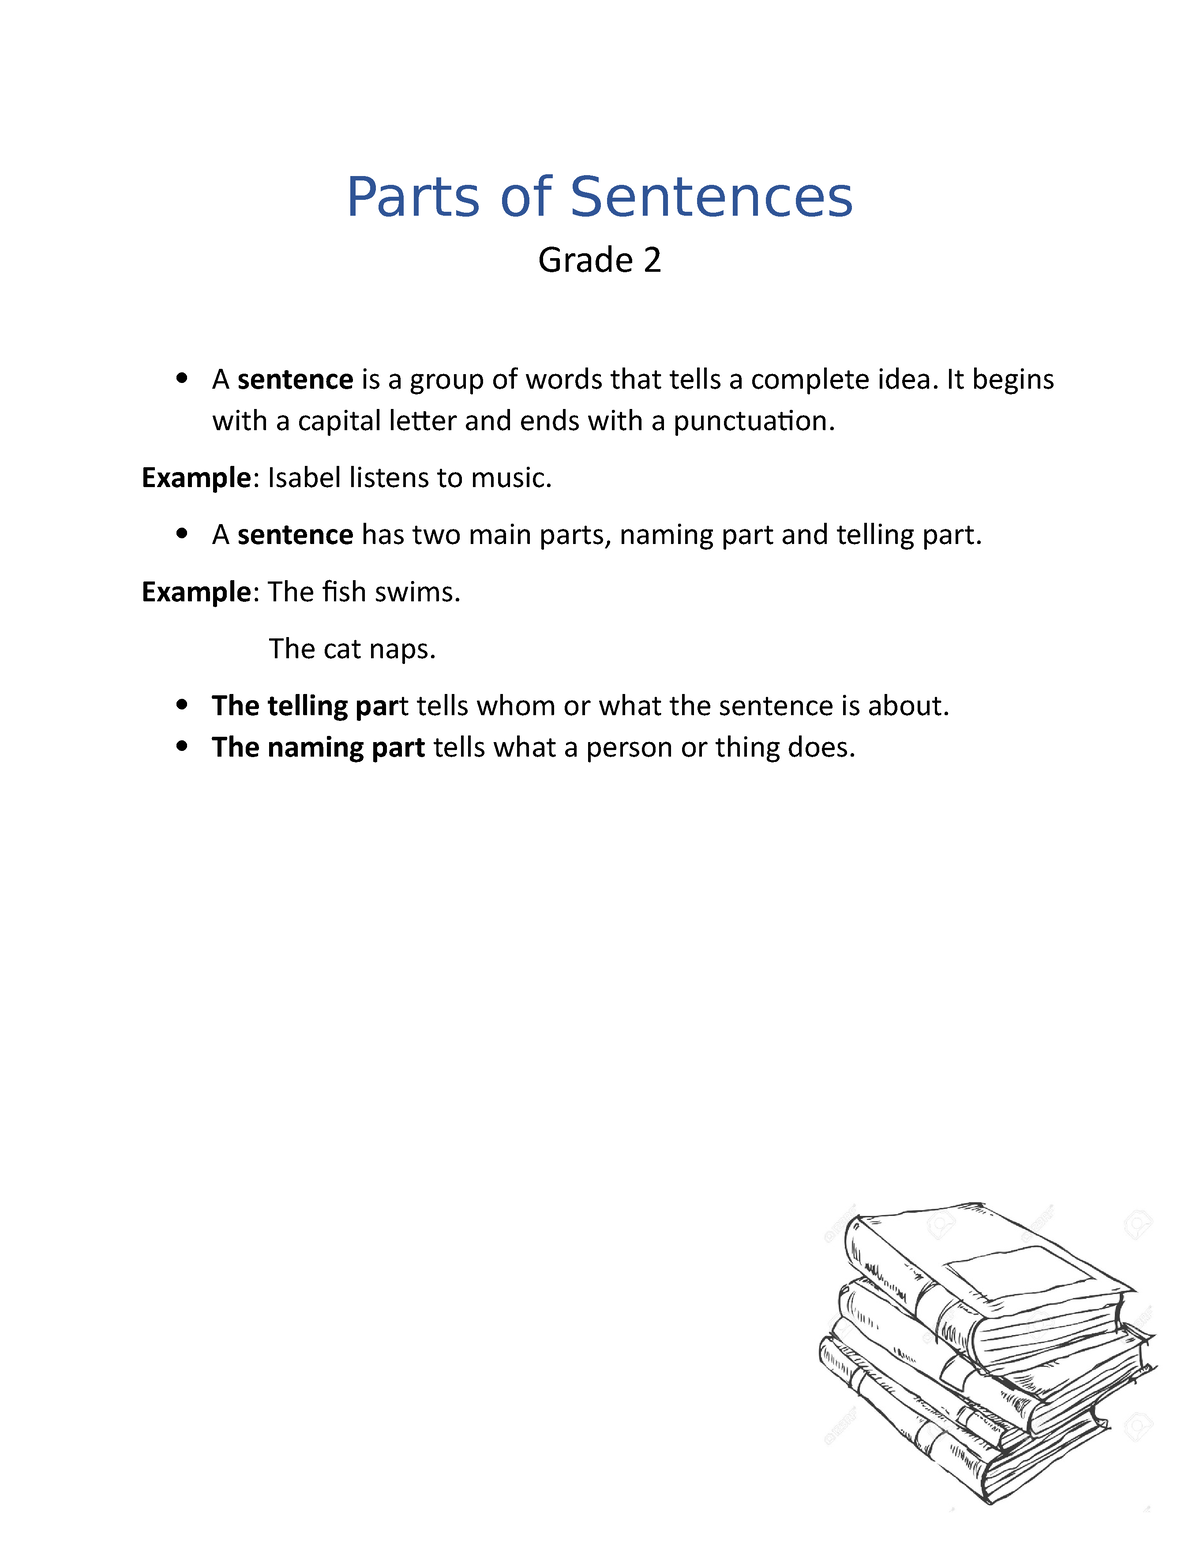 parts-of-sentences-grade-2-parts-of-sentences-grade-2-awith-a